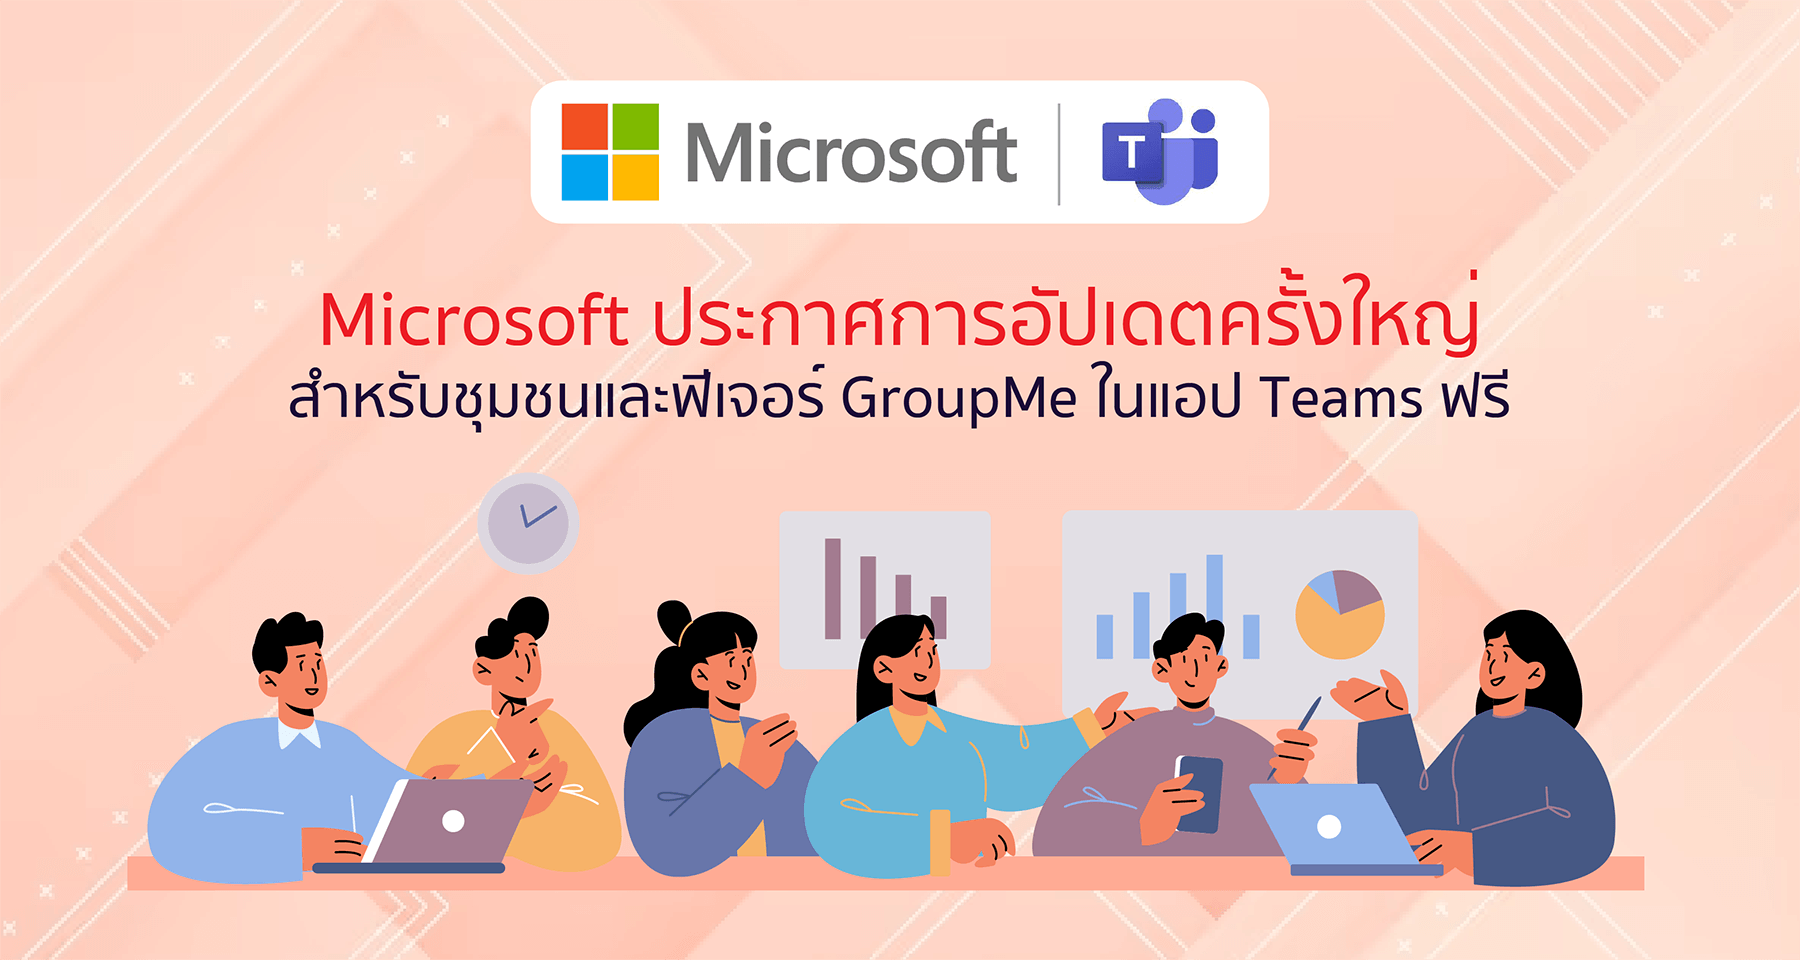 Microsoft ประกาศการอัปเดตครั้งใหญ่ สำหรับชุมชนและฟีเจอร์ GroupMe ในแอป Teams ฟรี